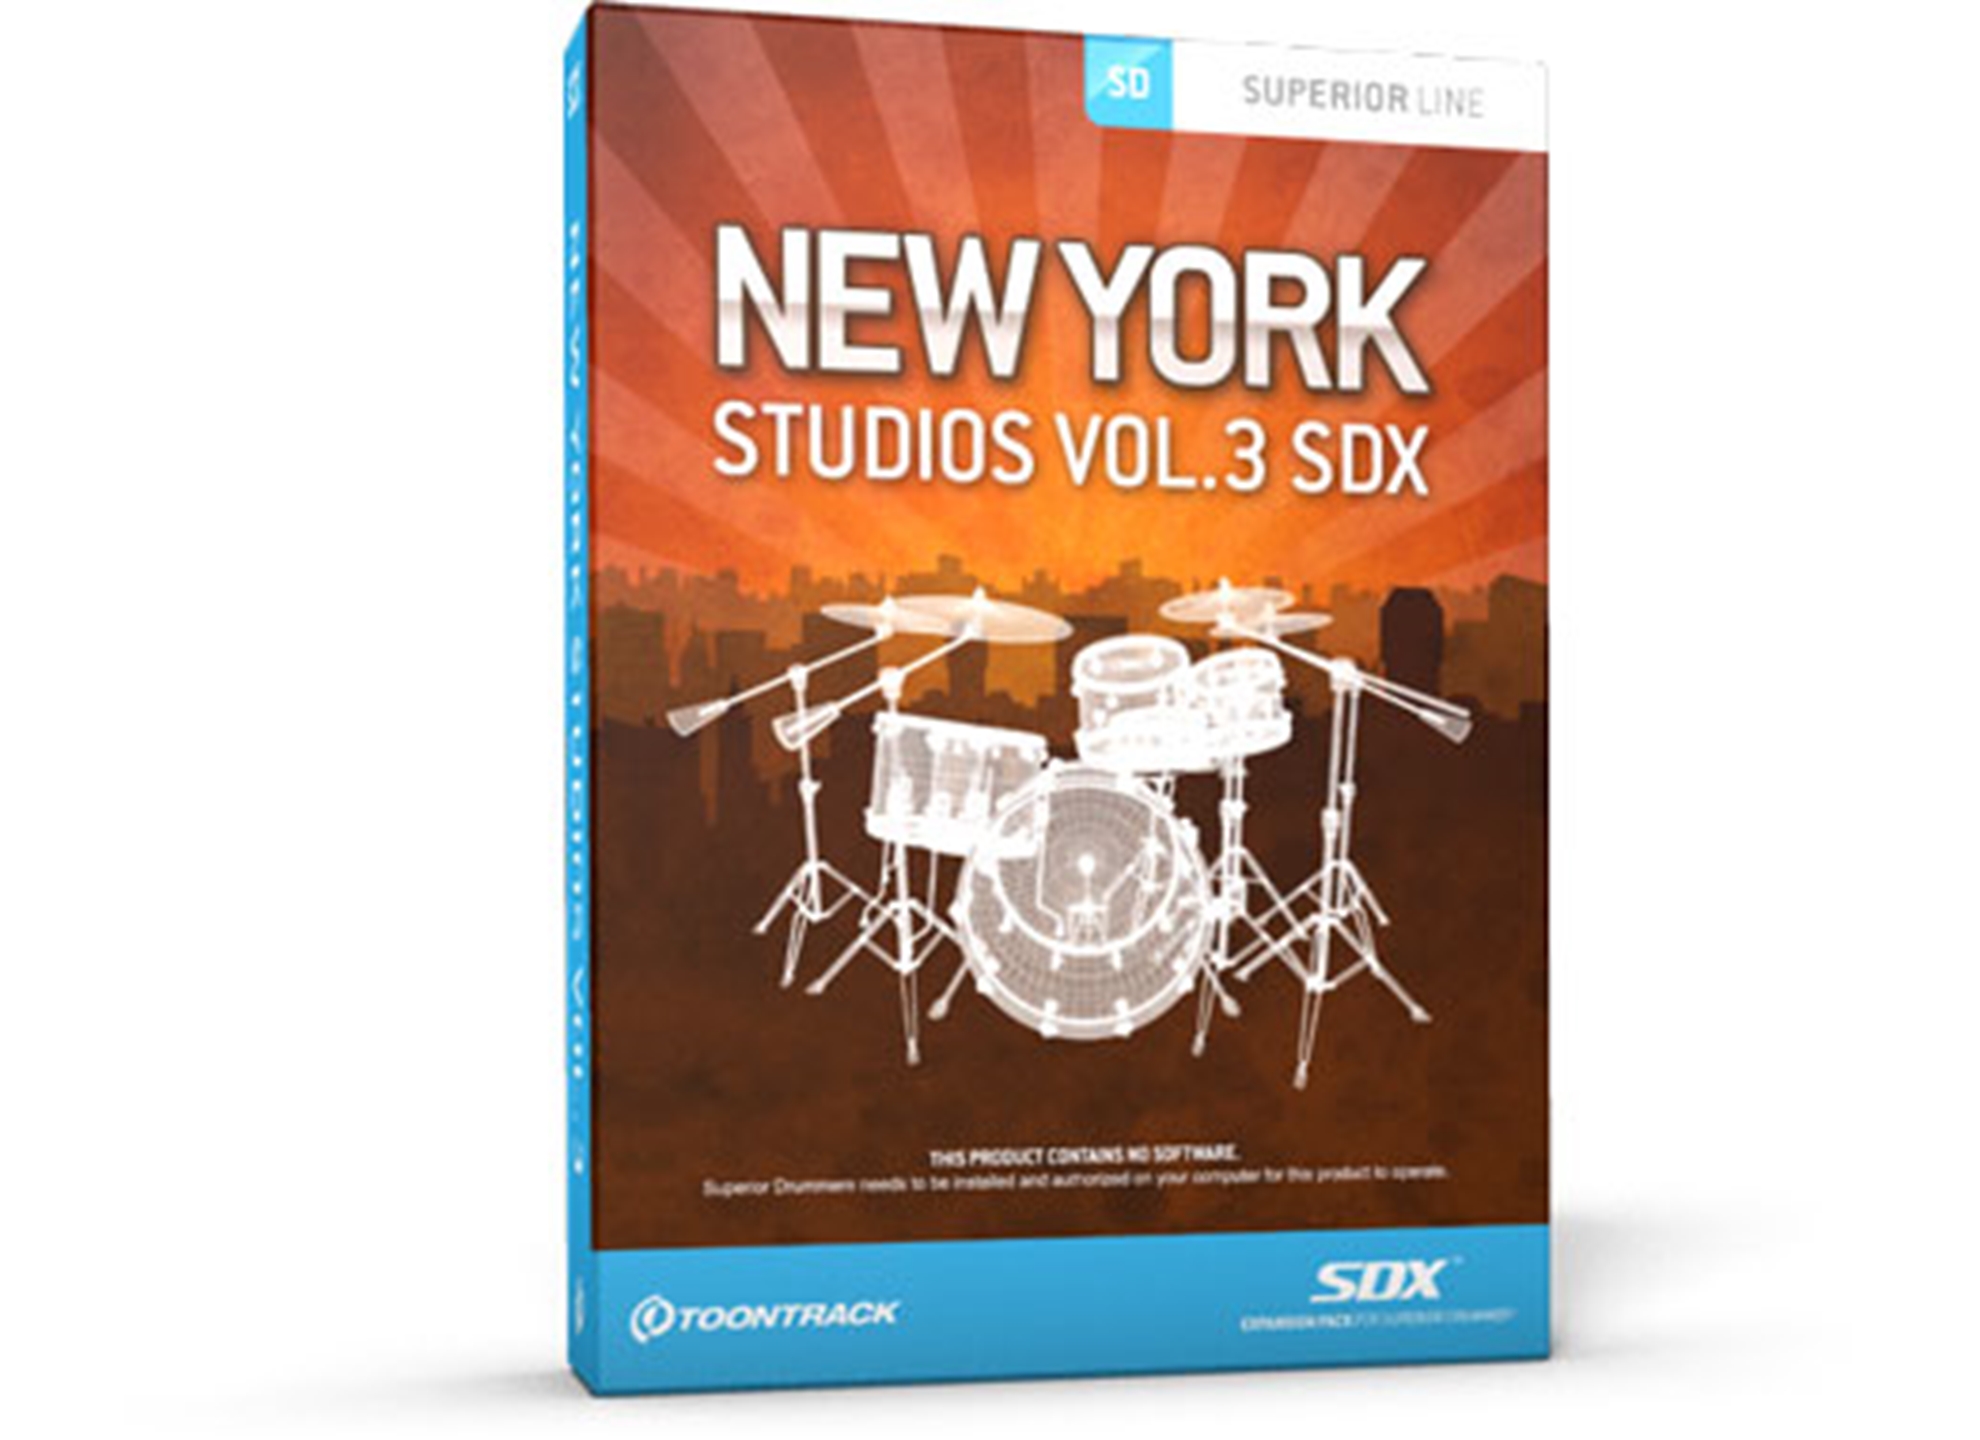 New York Studios Vol. 3 SDX